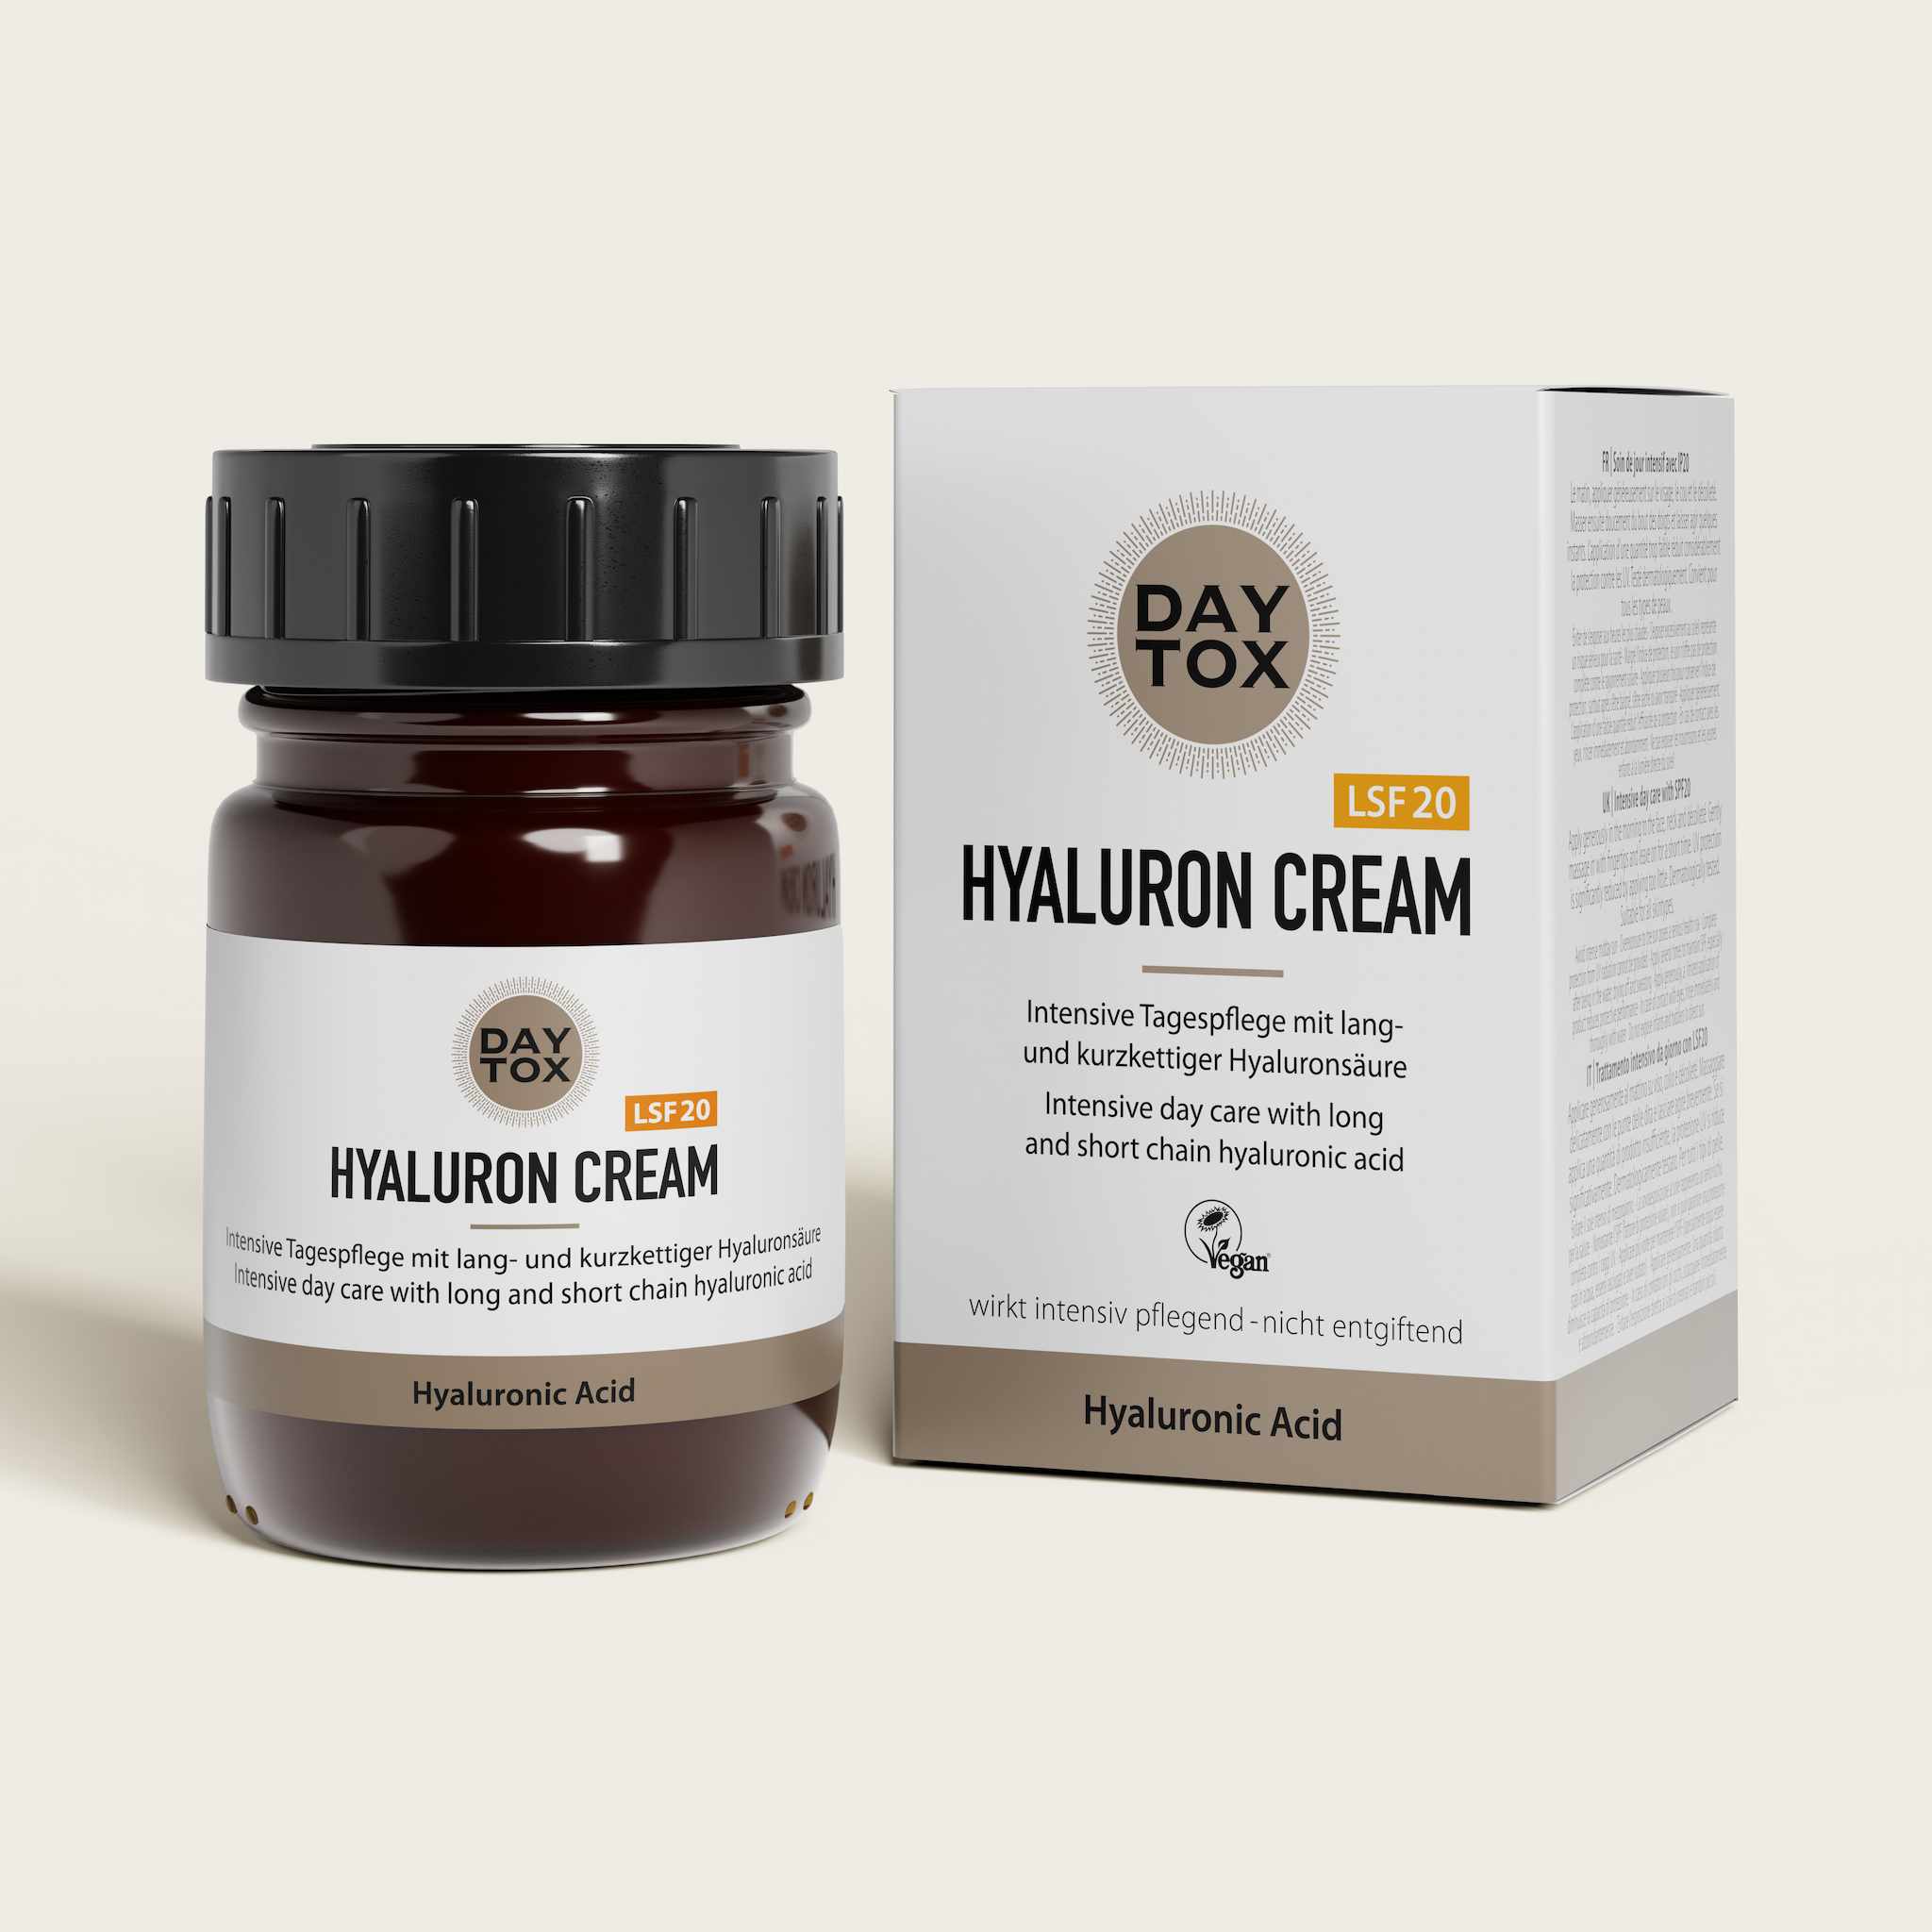 Hyaluron Cream LSF20